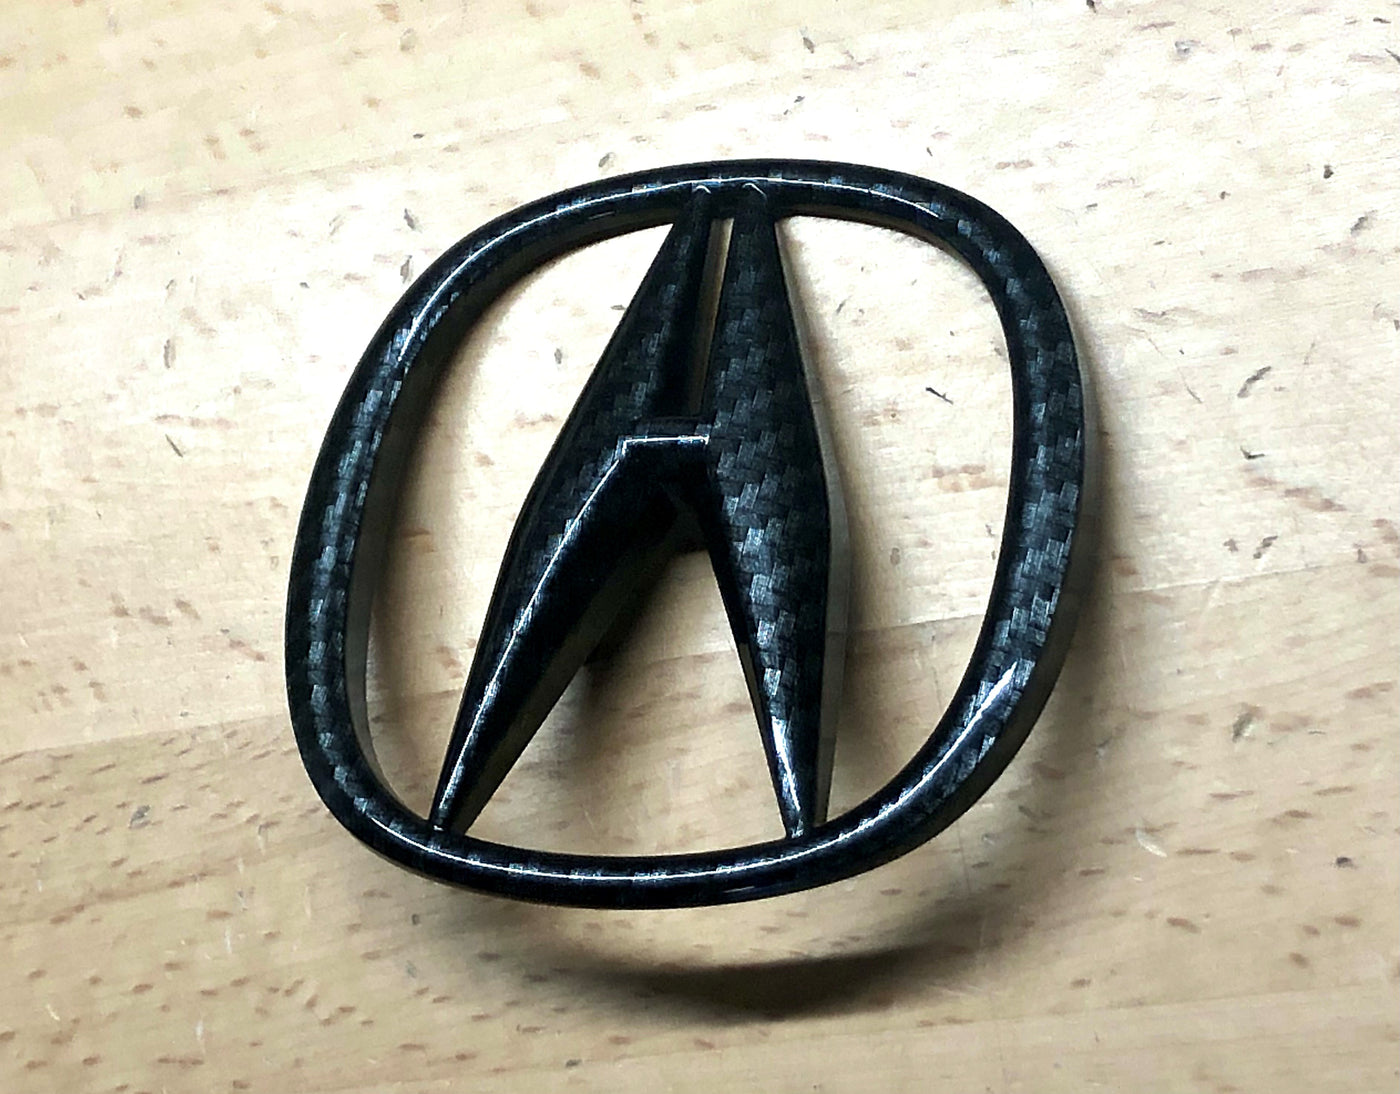 Acura TSX 09-14 Carbon Fiber Rear Emblem Logo